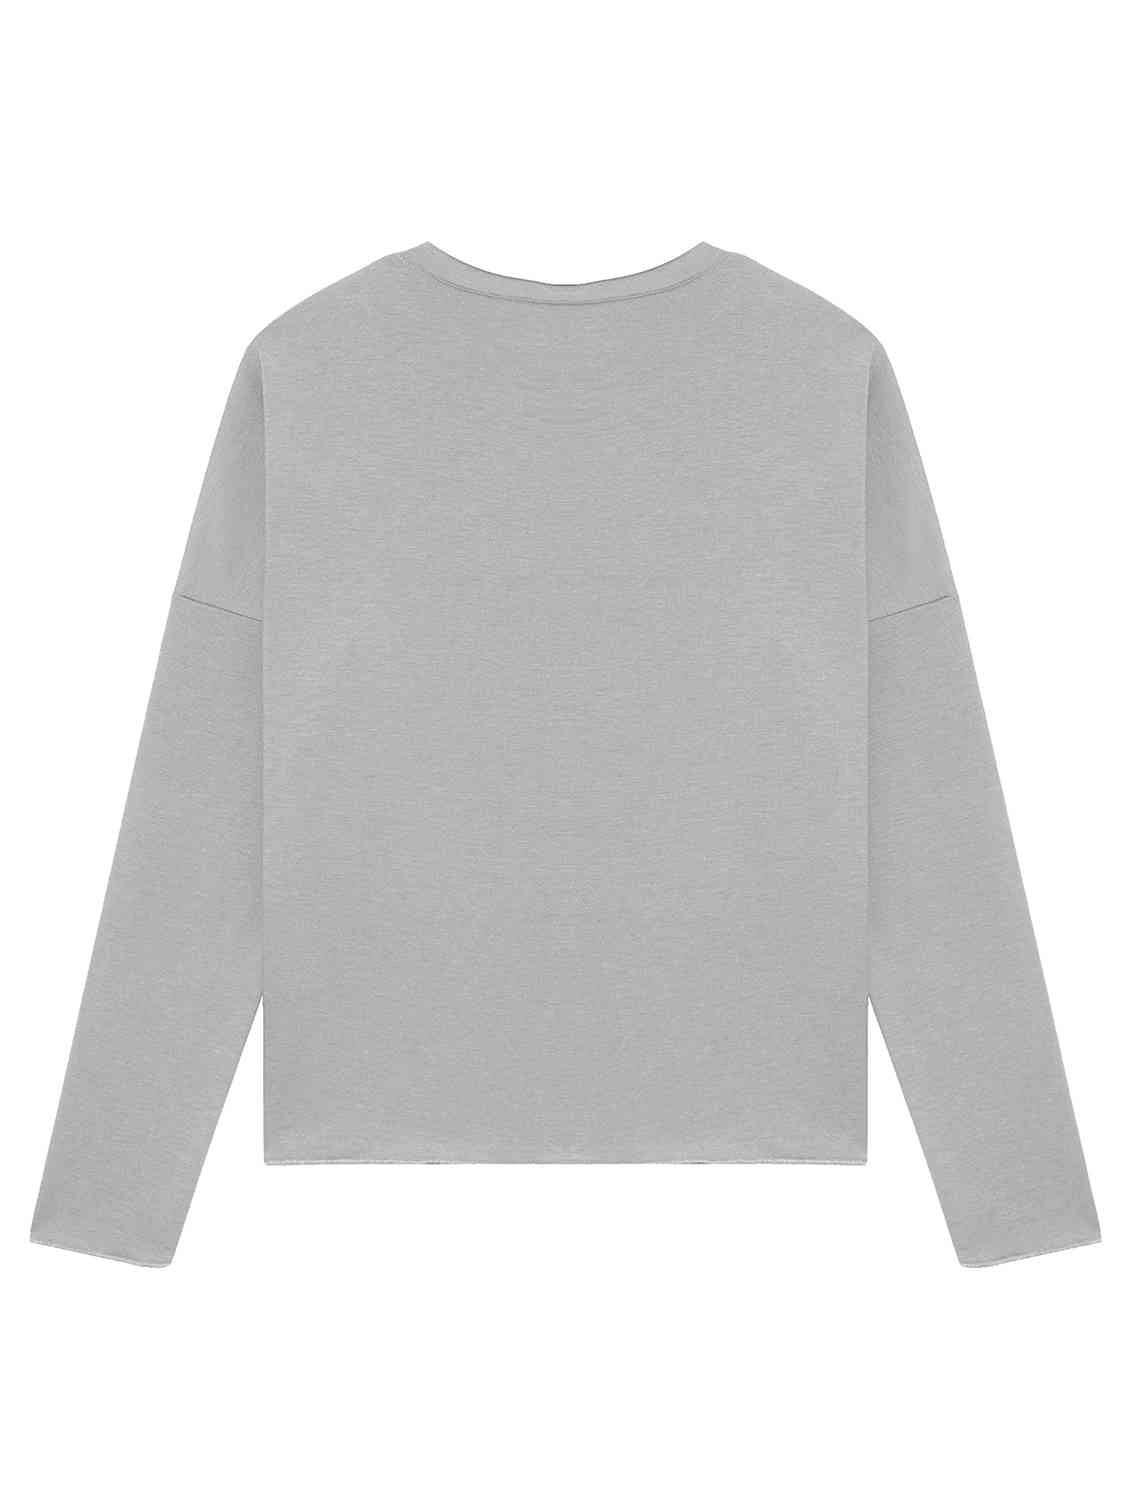 SAVE THE PUMPKIN Graphic Full Size Sweatshirt